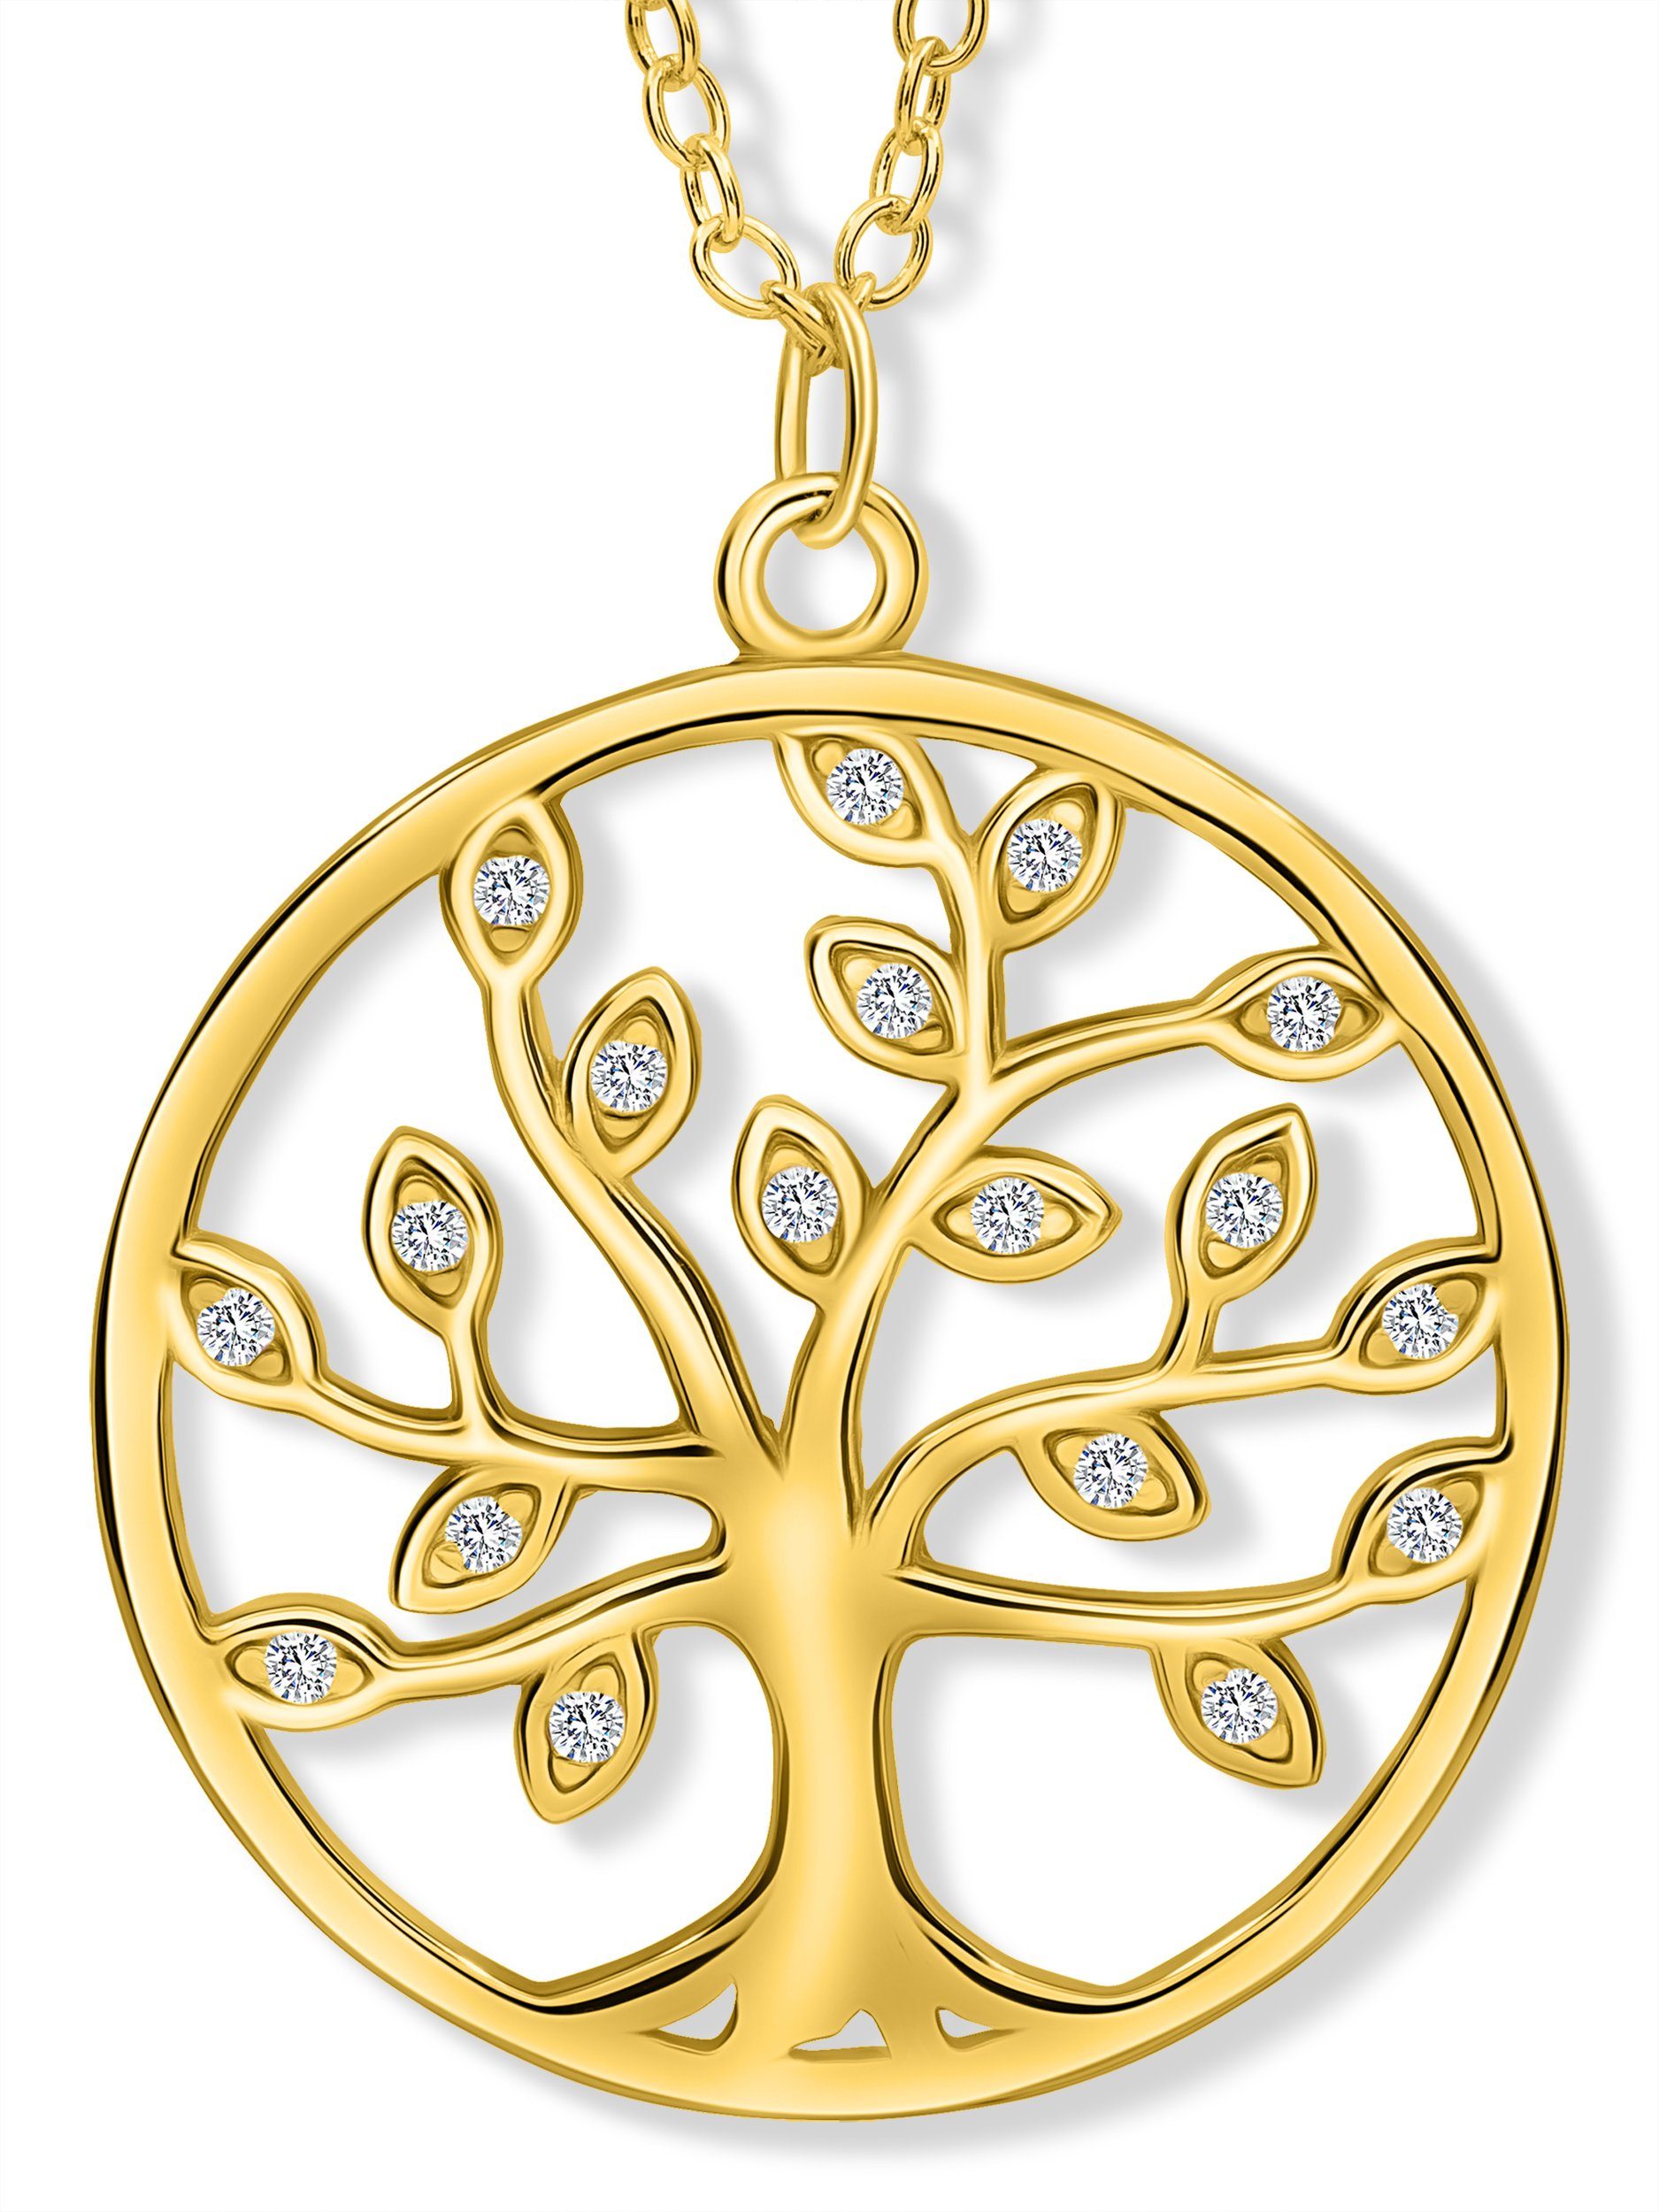 mit Anhänger Glanz of mit Gold Life VIASOUL Zertifikat, Lebensbaum des Lebens Tree I Halskette Baum I stahlender Kette